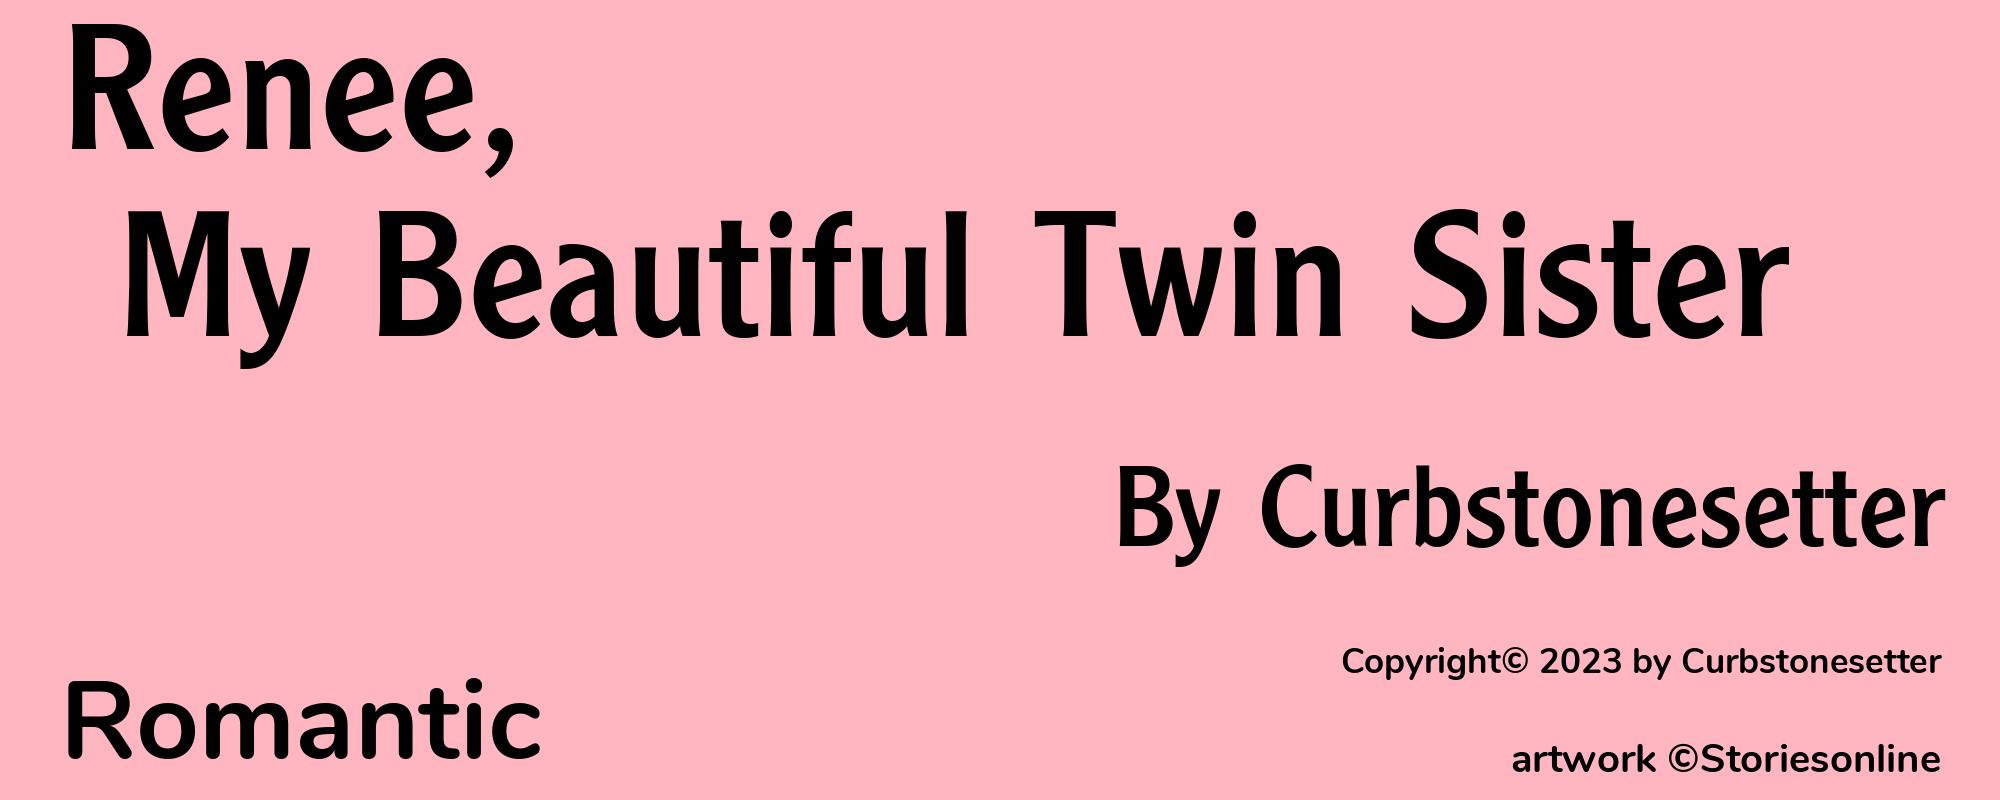 Renee, My Beautiful Twin Sister - Cover